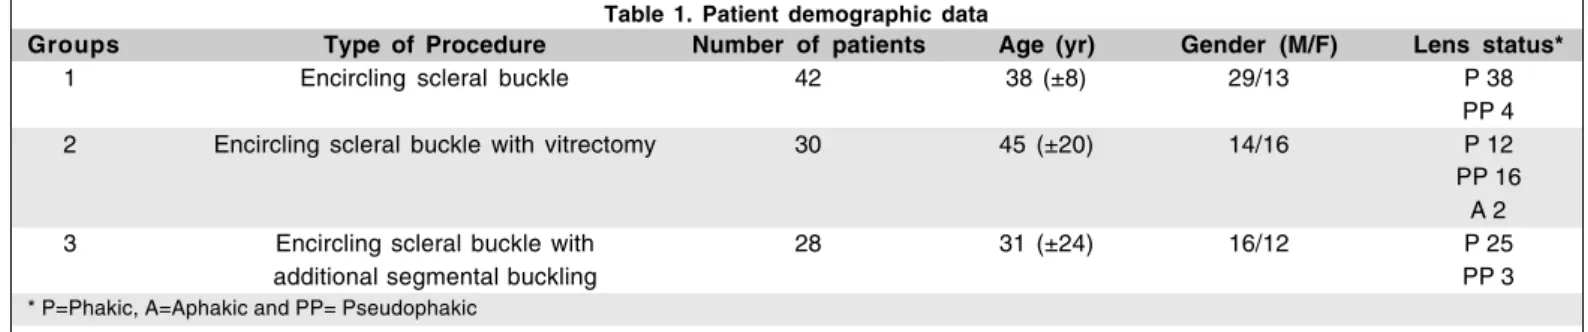 Table 1. Patient demographic data